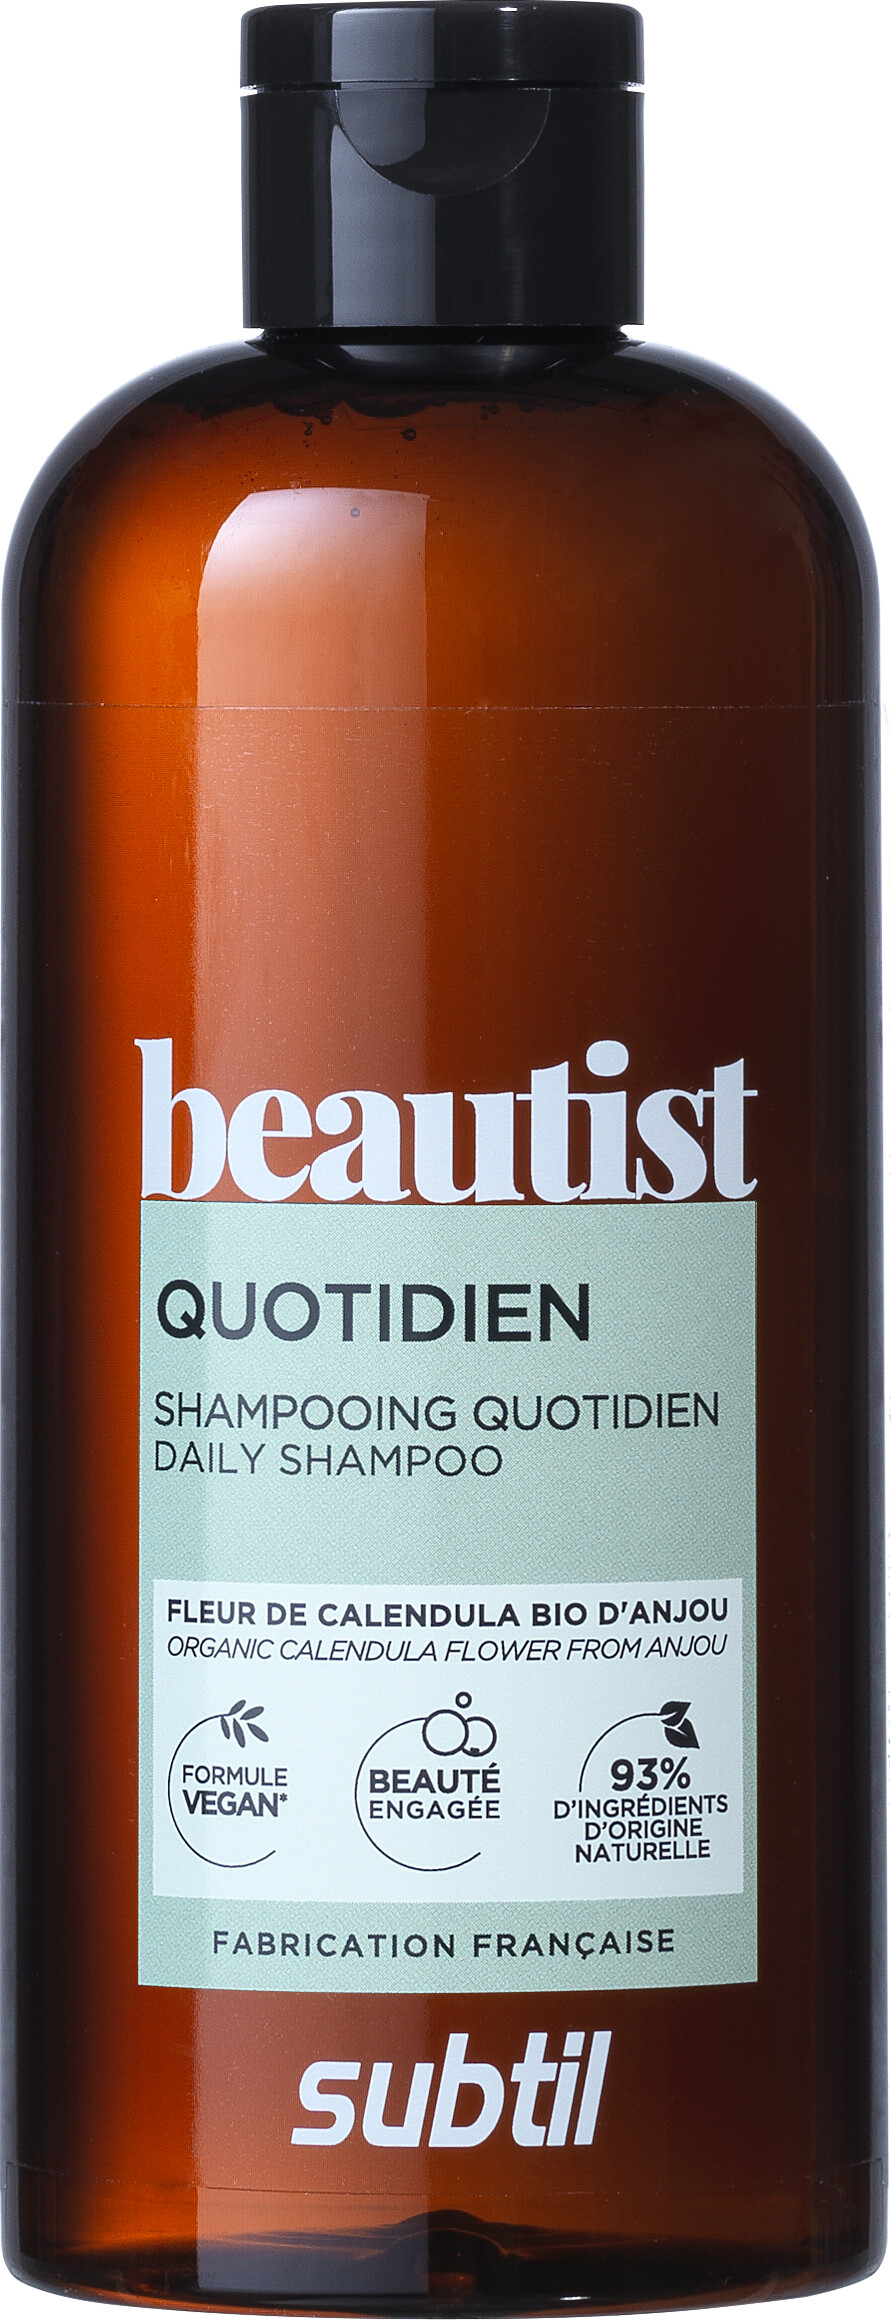 Se Subtil Beautist - Daily Shampoo - Organic Calendula Flower 300 Ml hos Gucca.dk